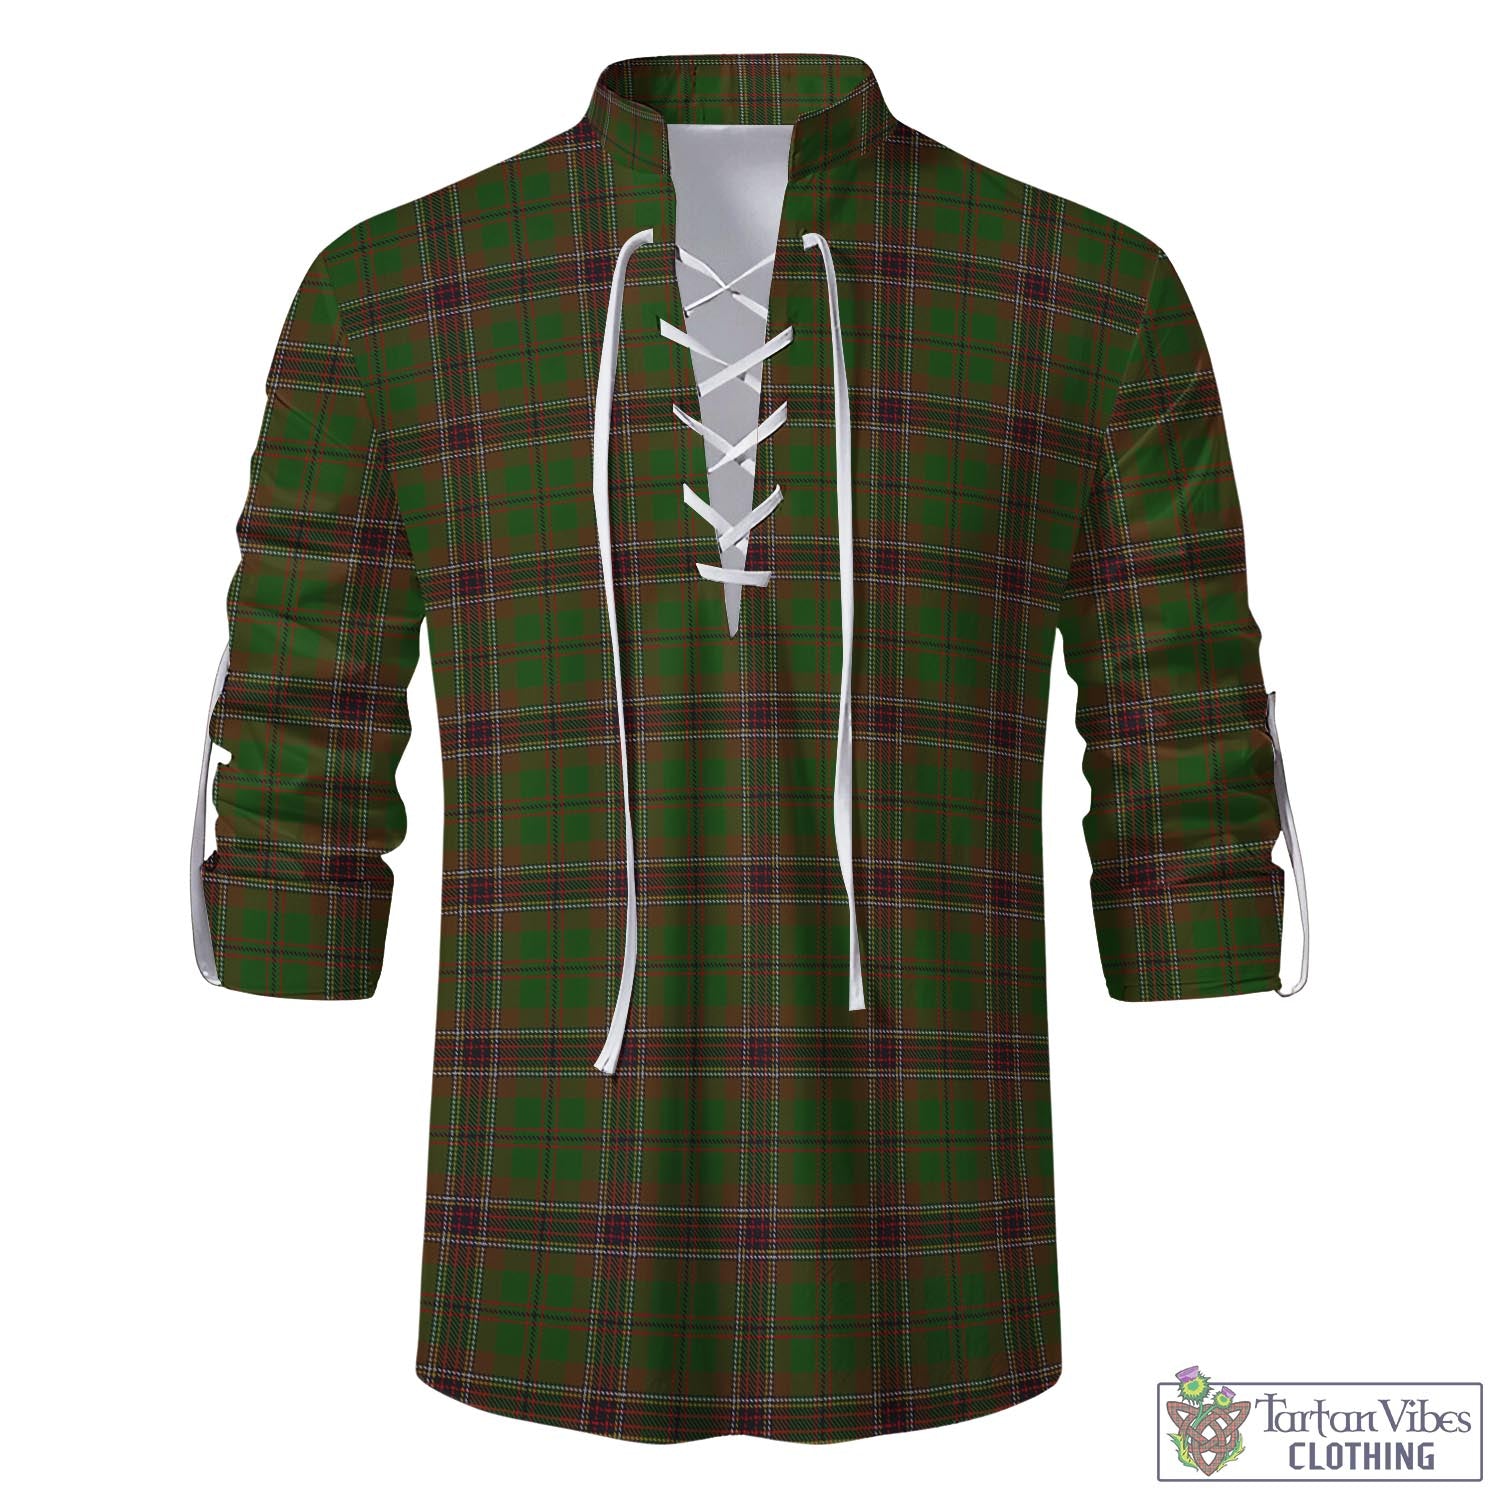 Tartan Vibes Clothing Murphy Tartan Men's Scottish Traditional Jacobite Ghillie Kilt Shirt